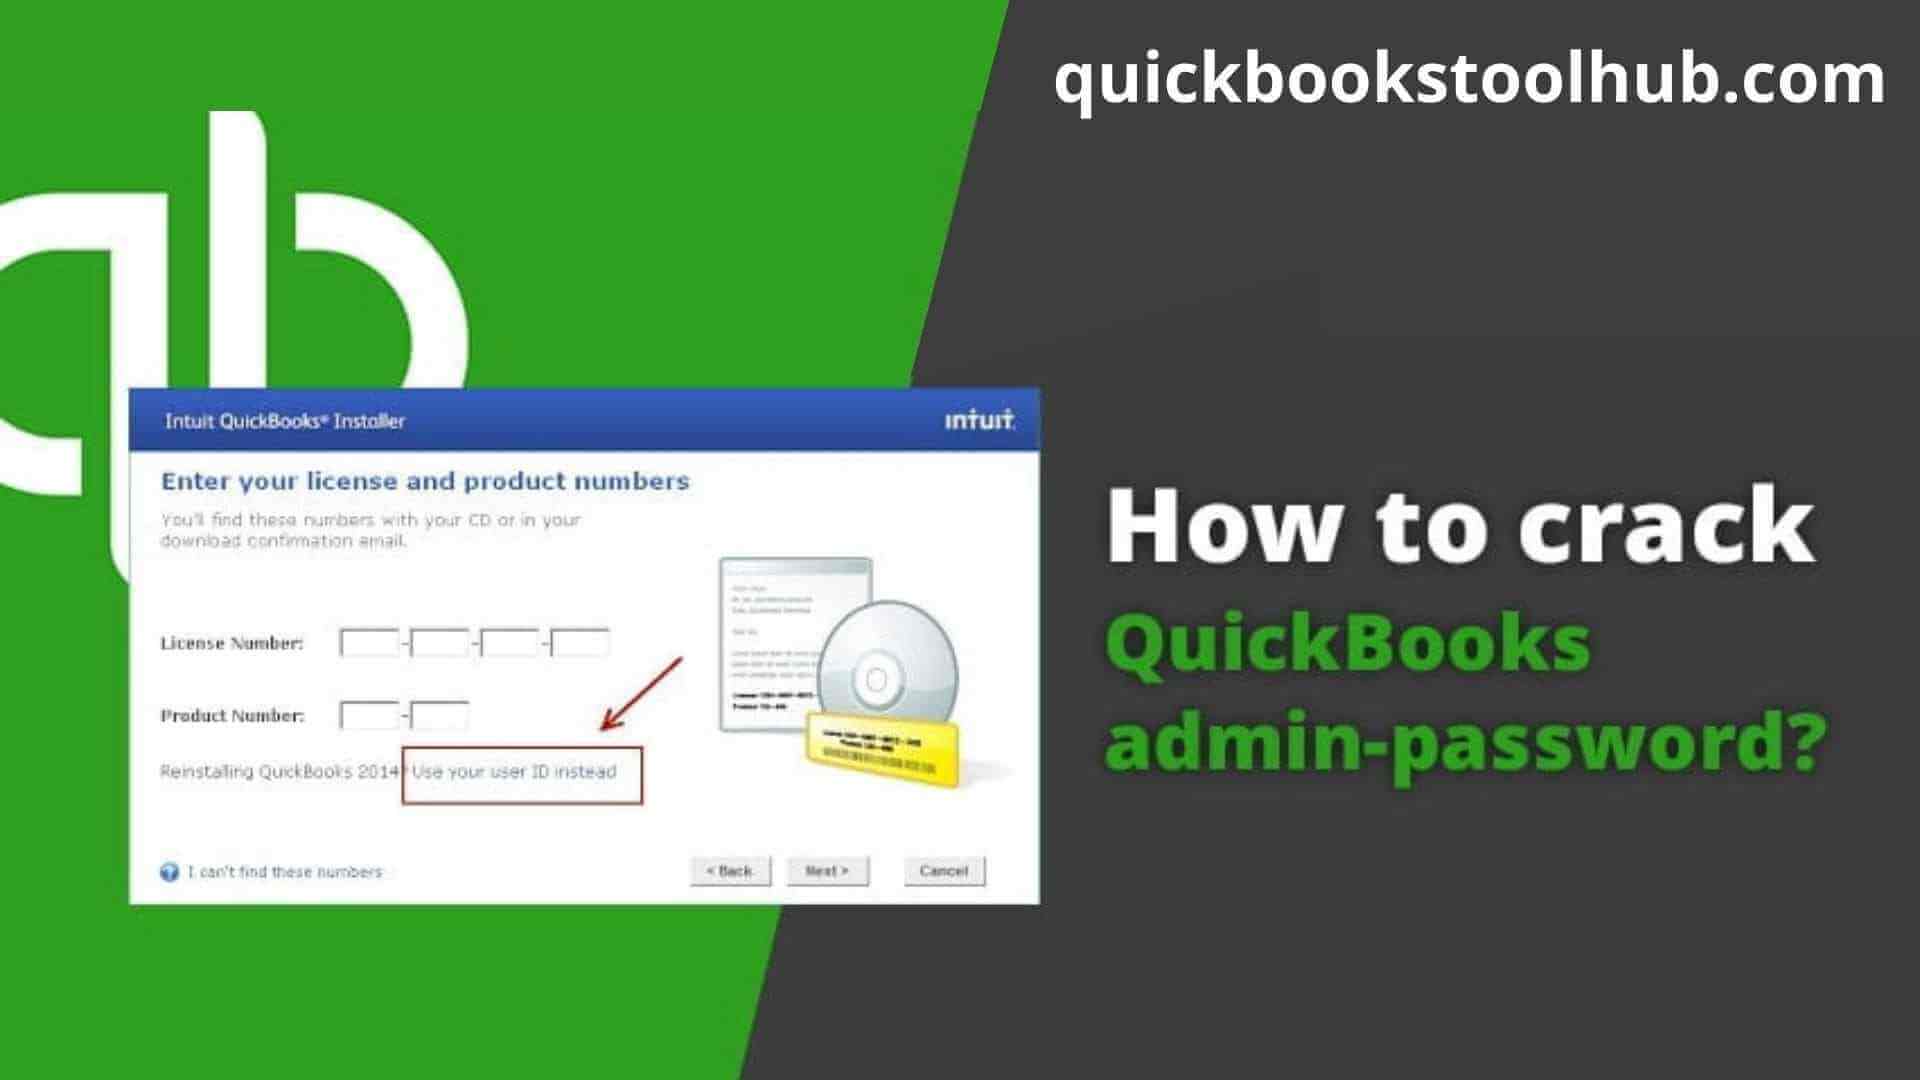 quickbooks 2014 update download